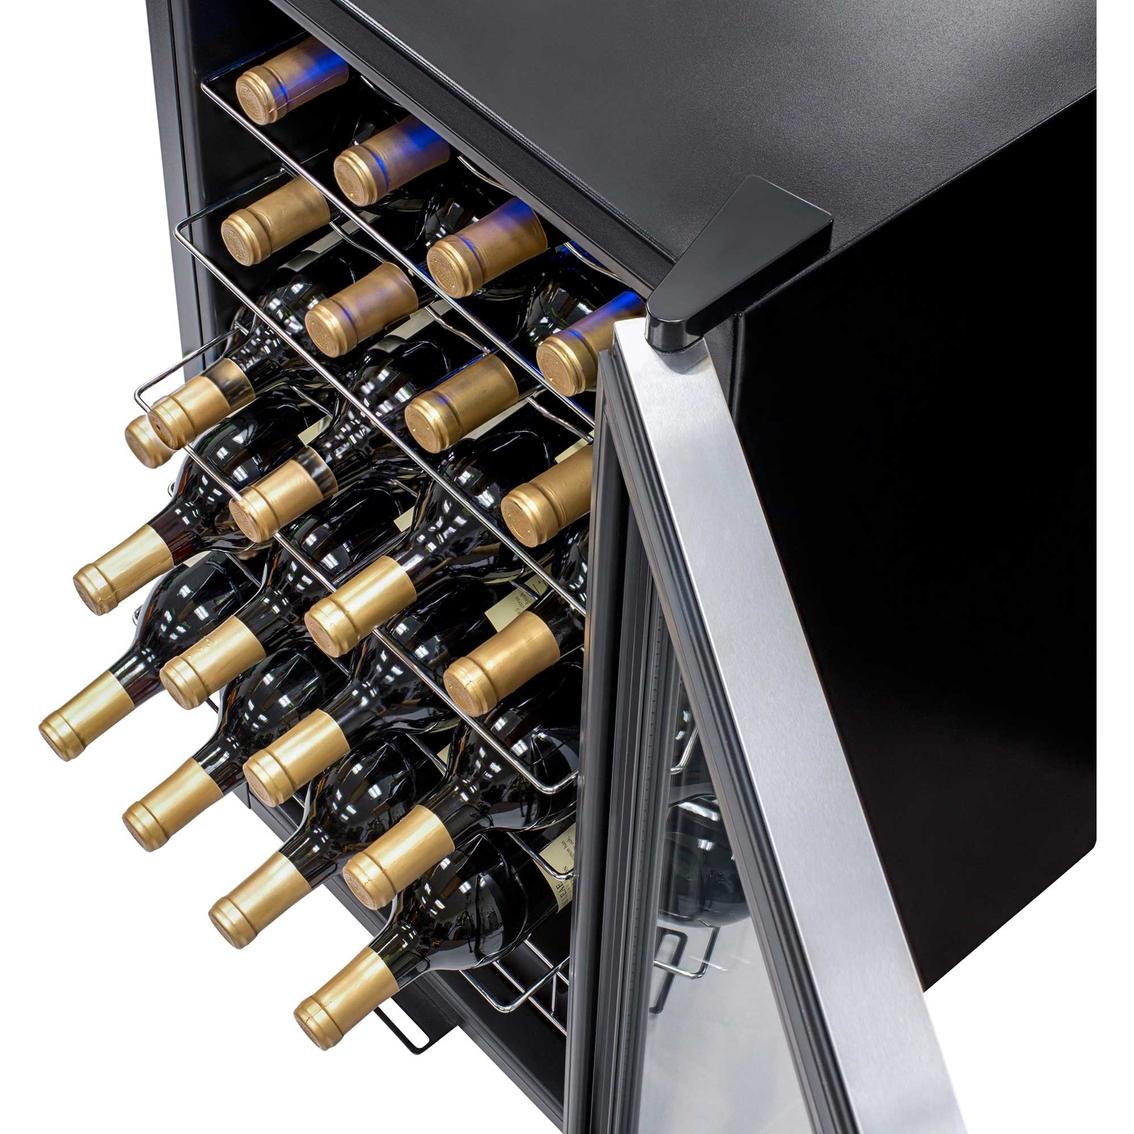 NewAir Freestanding 27 Bottle Wine Cooler - Image 4 of 9